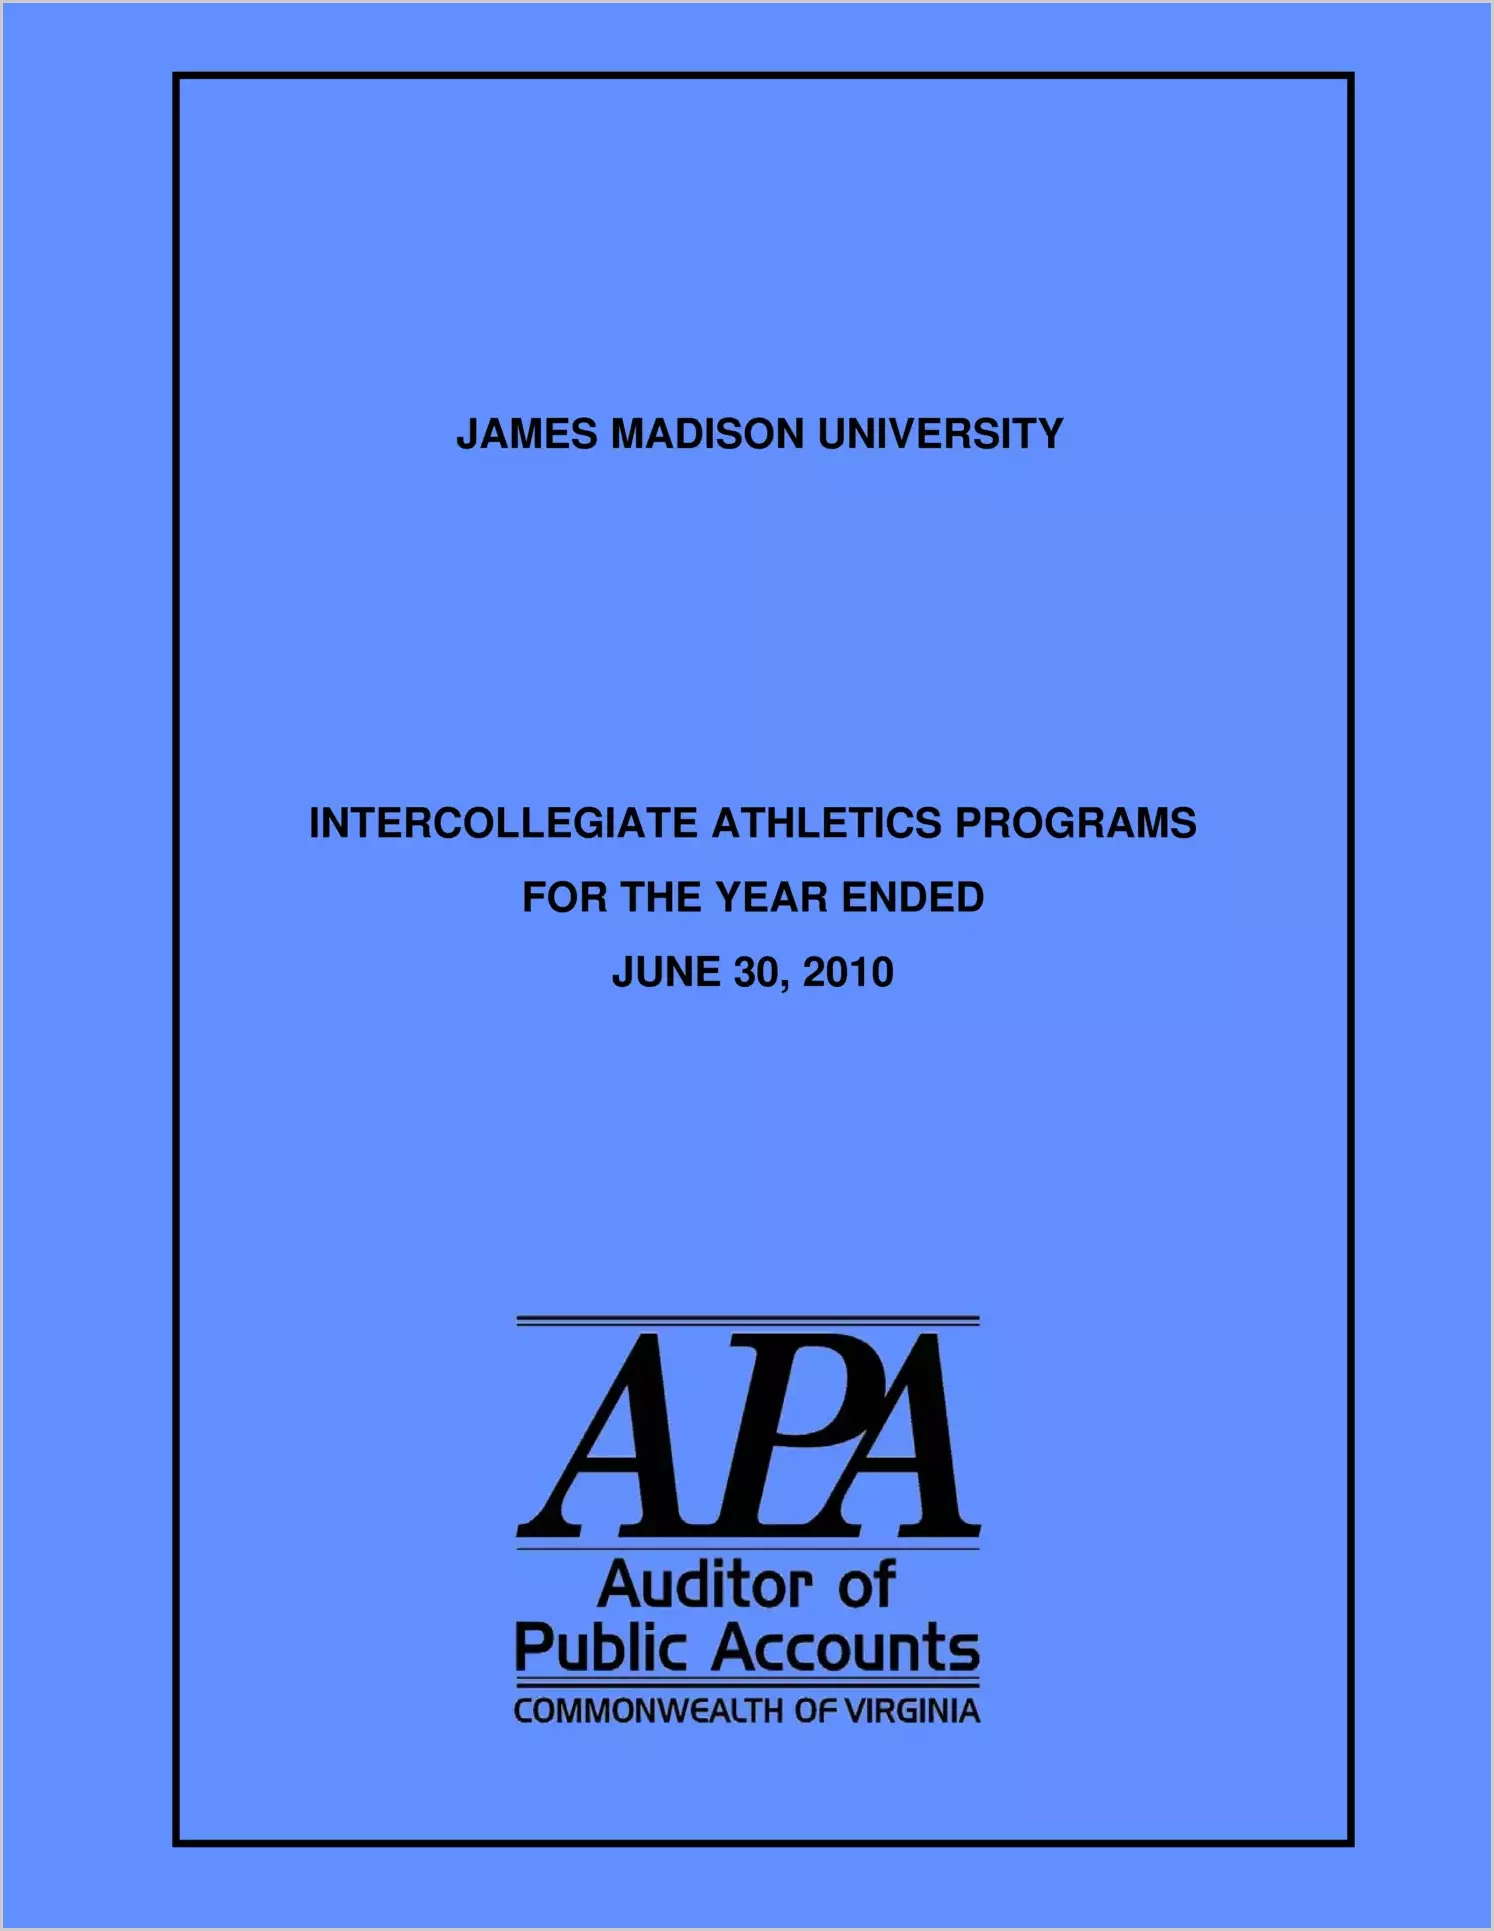 James Madison University Intercollegiate Athletics Programs for the year ended June 30, 2010